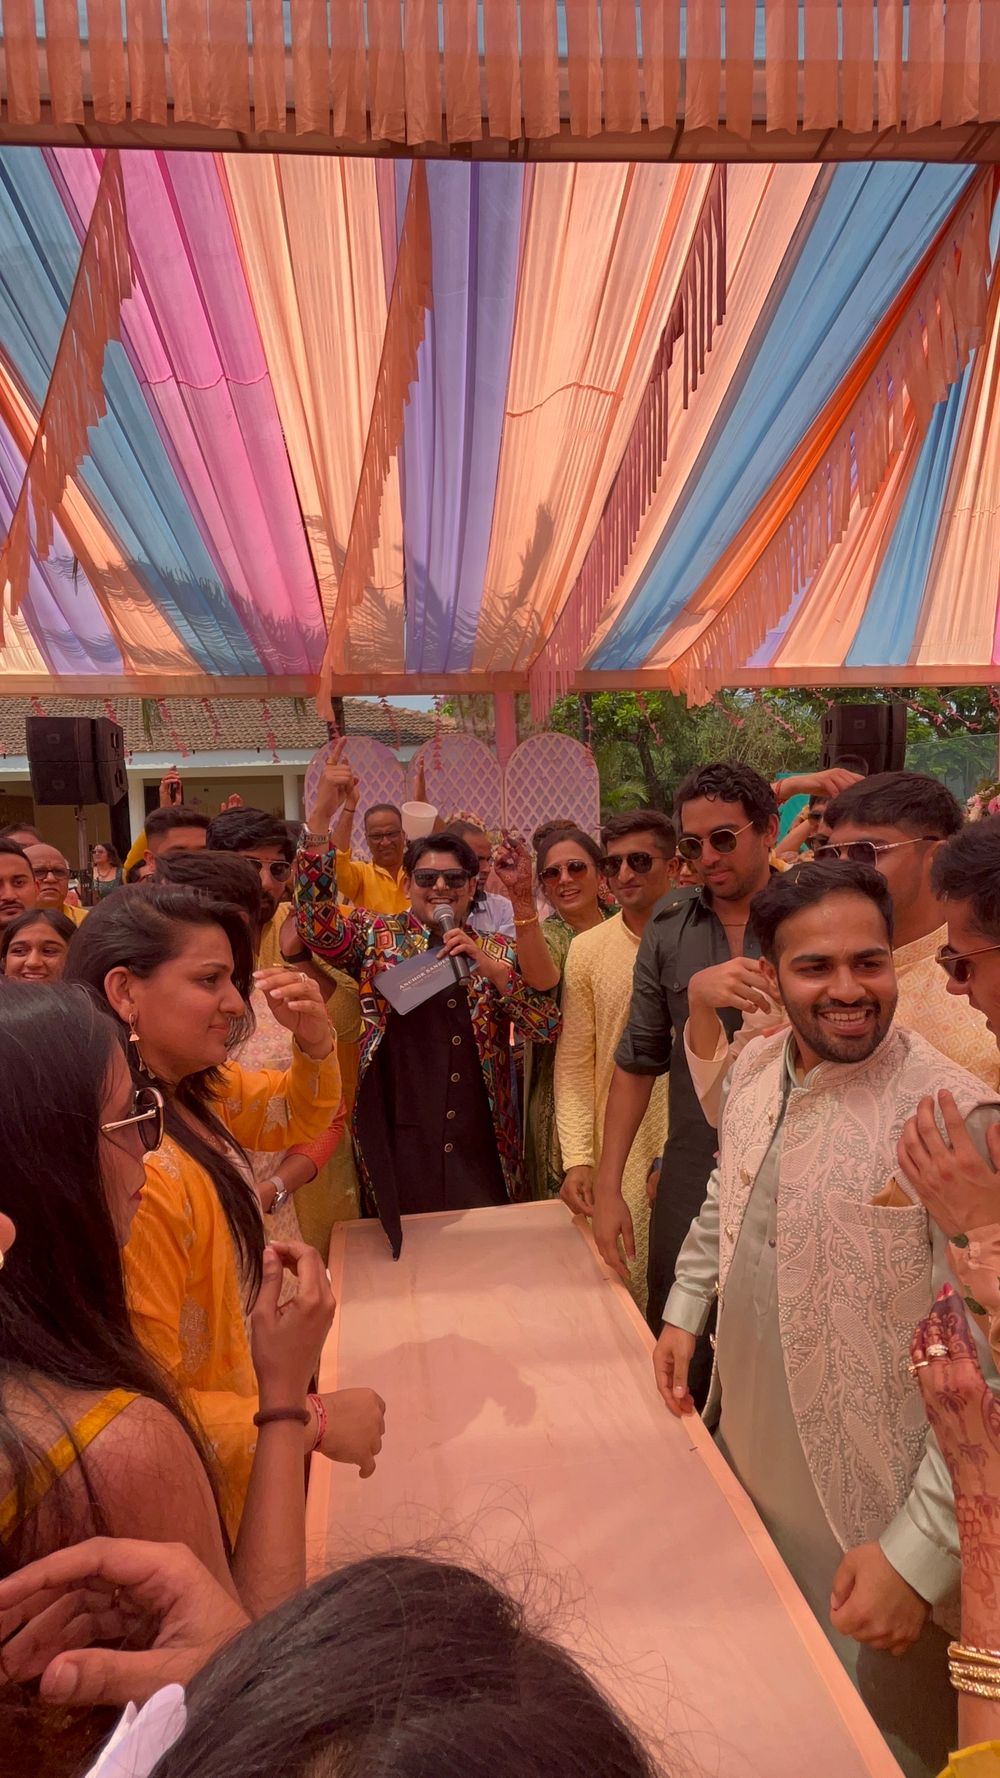 Photo By Anchor Sandesh - Wedding Entertainment 